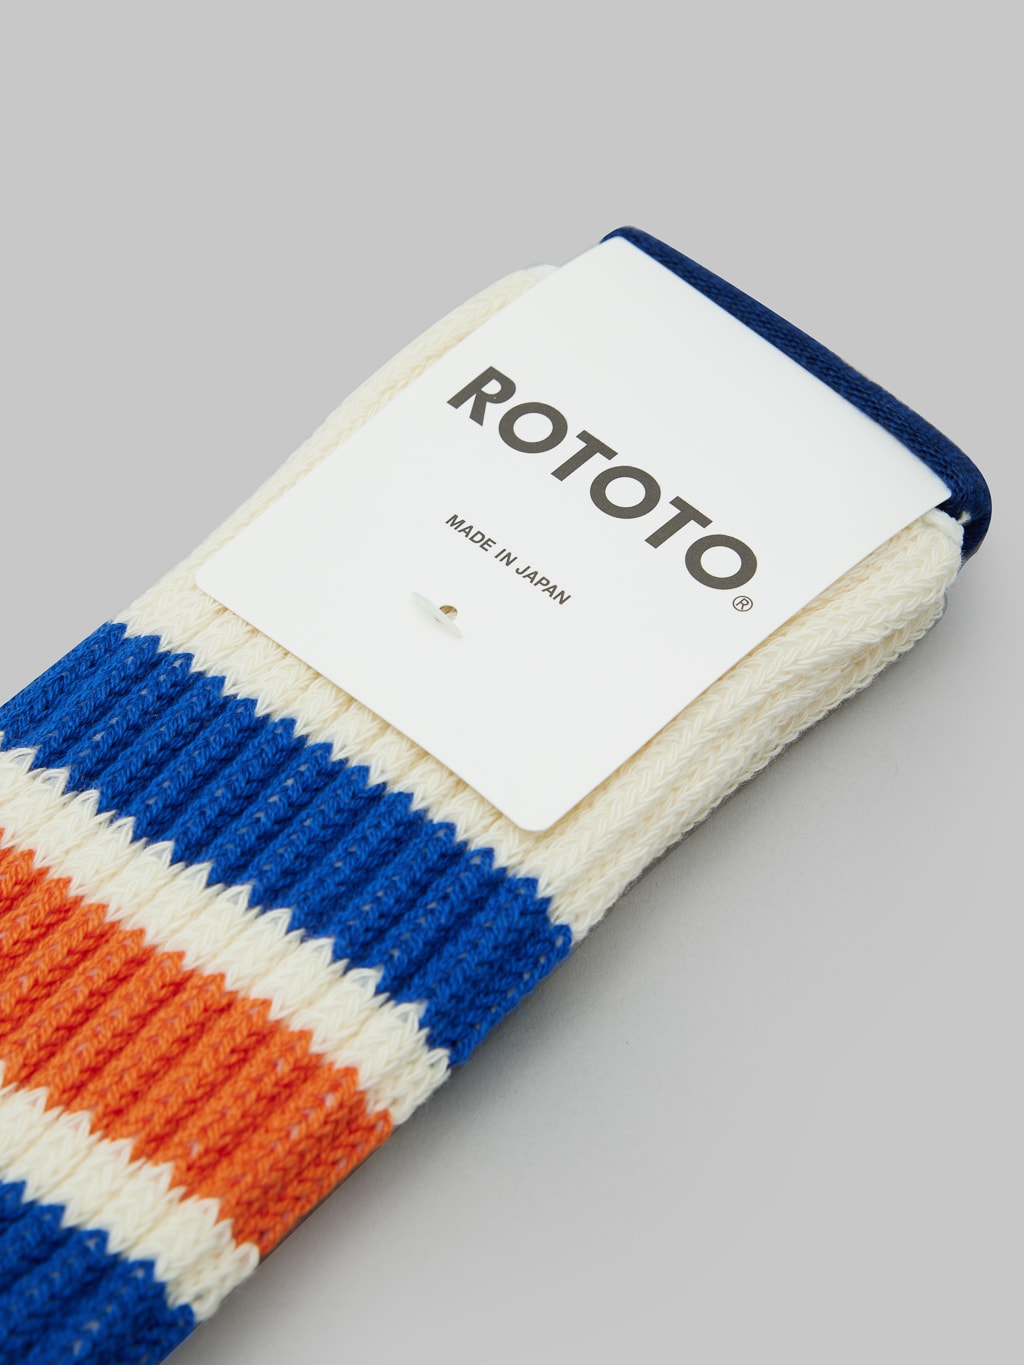 rototo oldschool crew socks blue orange brand label